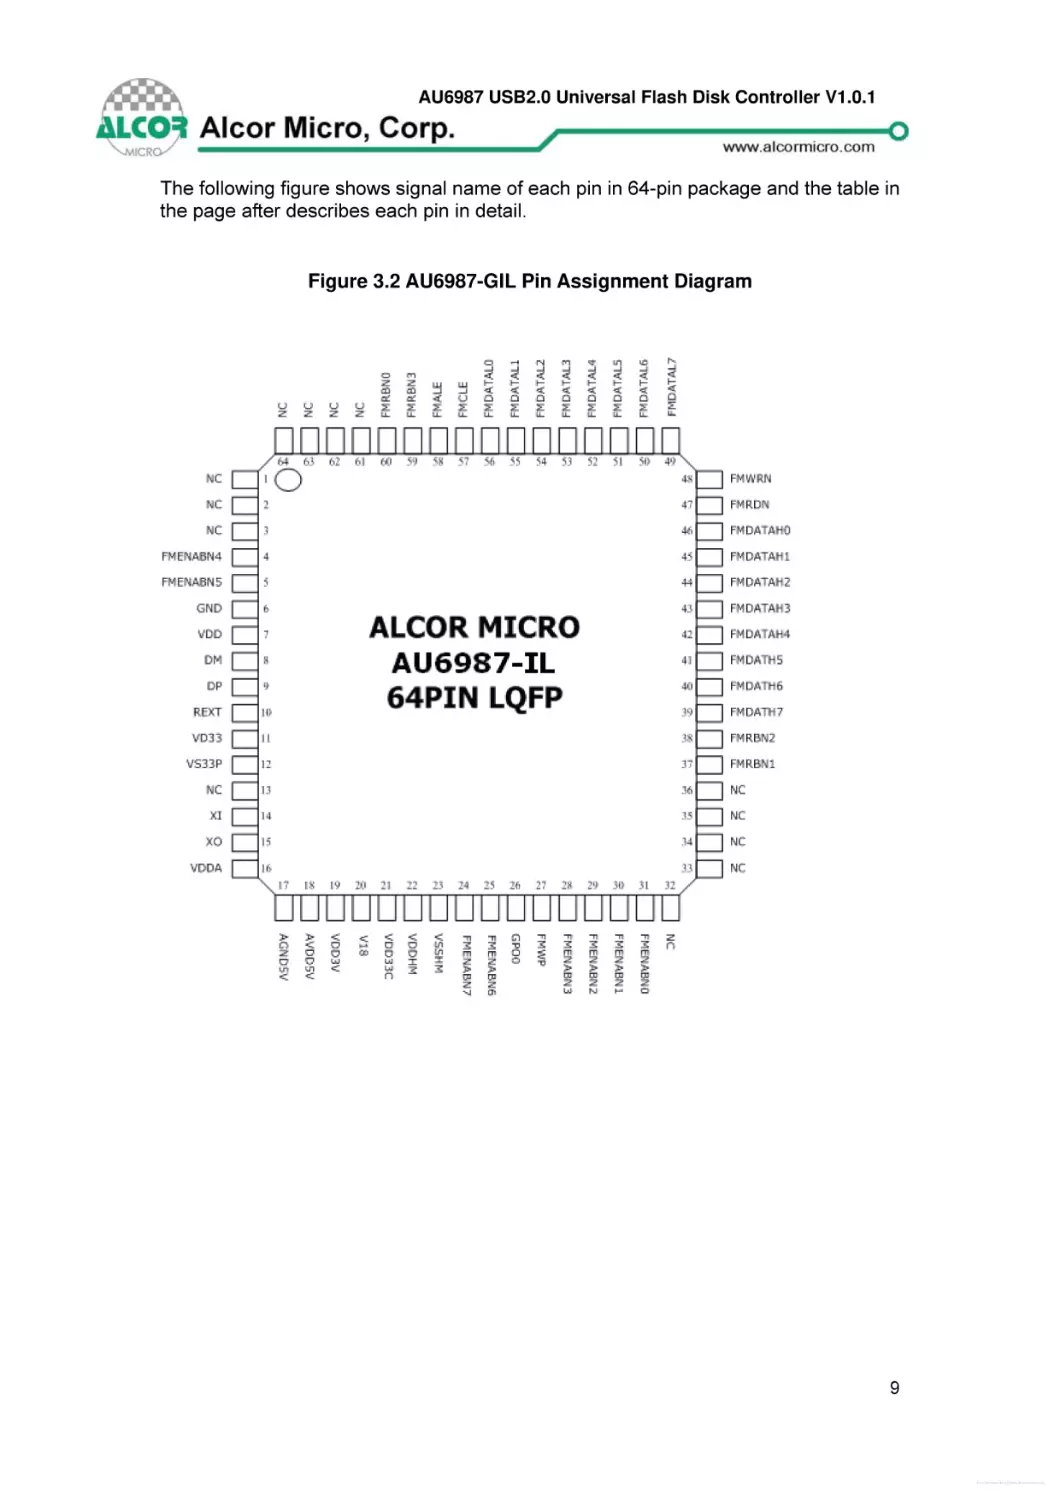 Figure 3.2 AU6987-GIL Pin Assignment Diagram